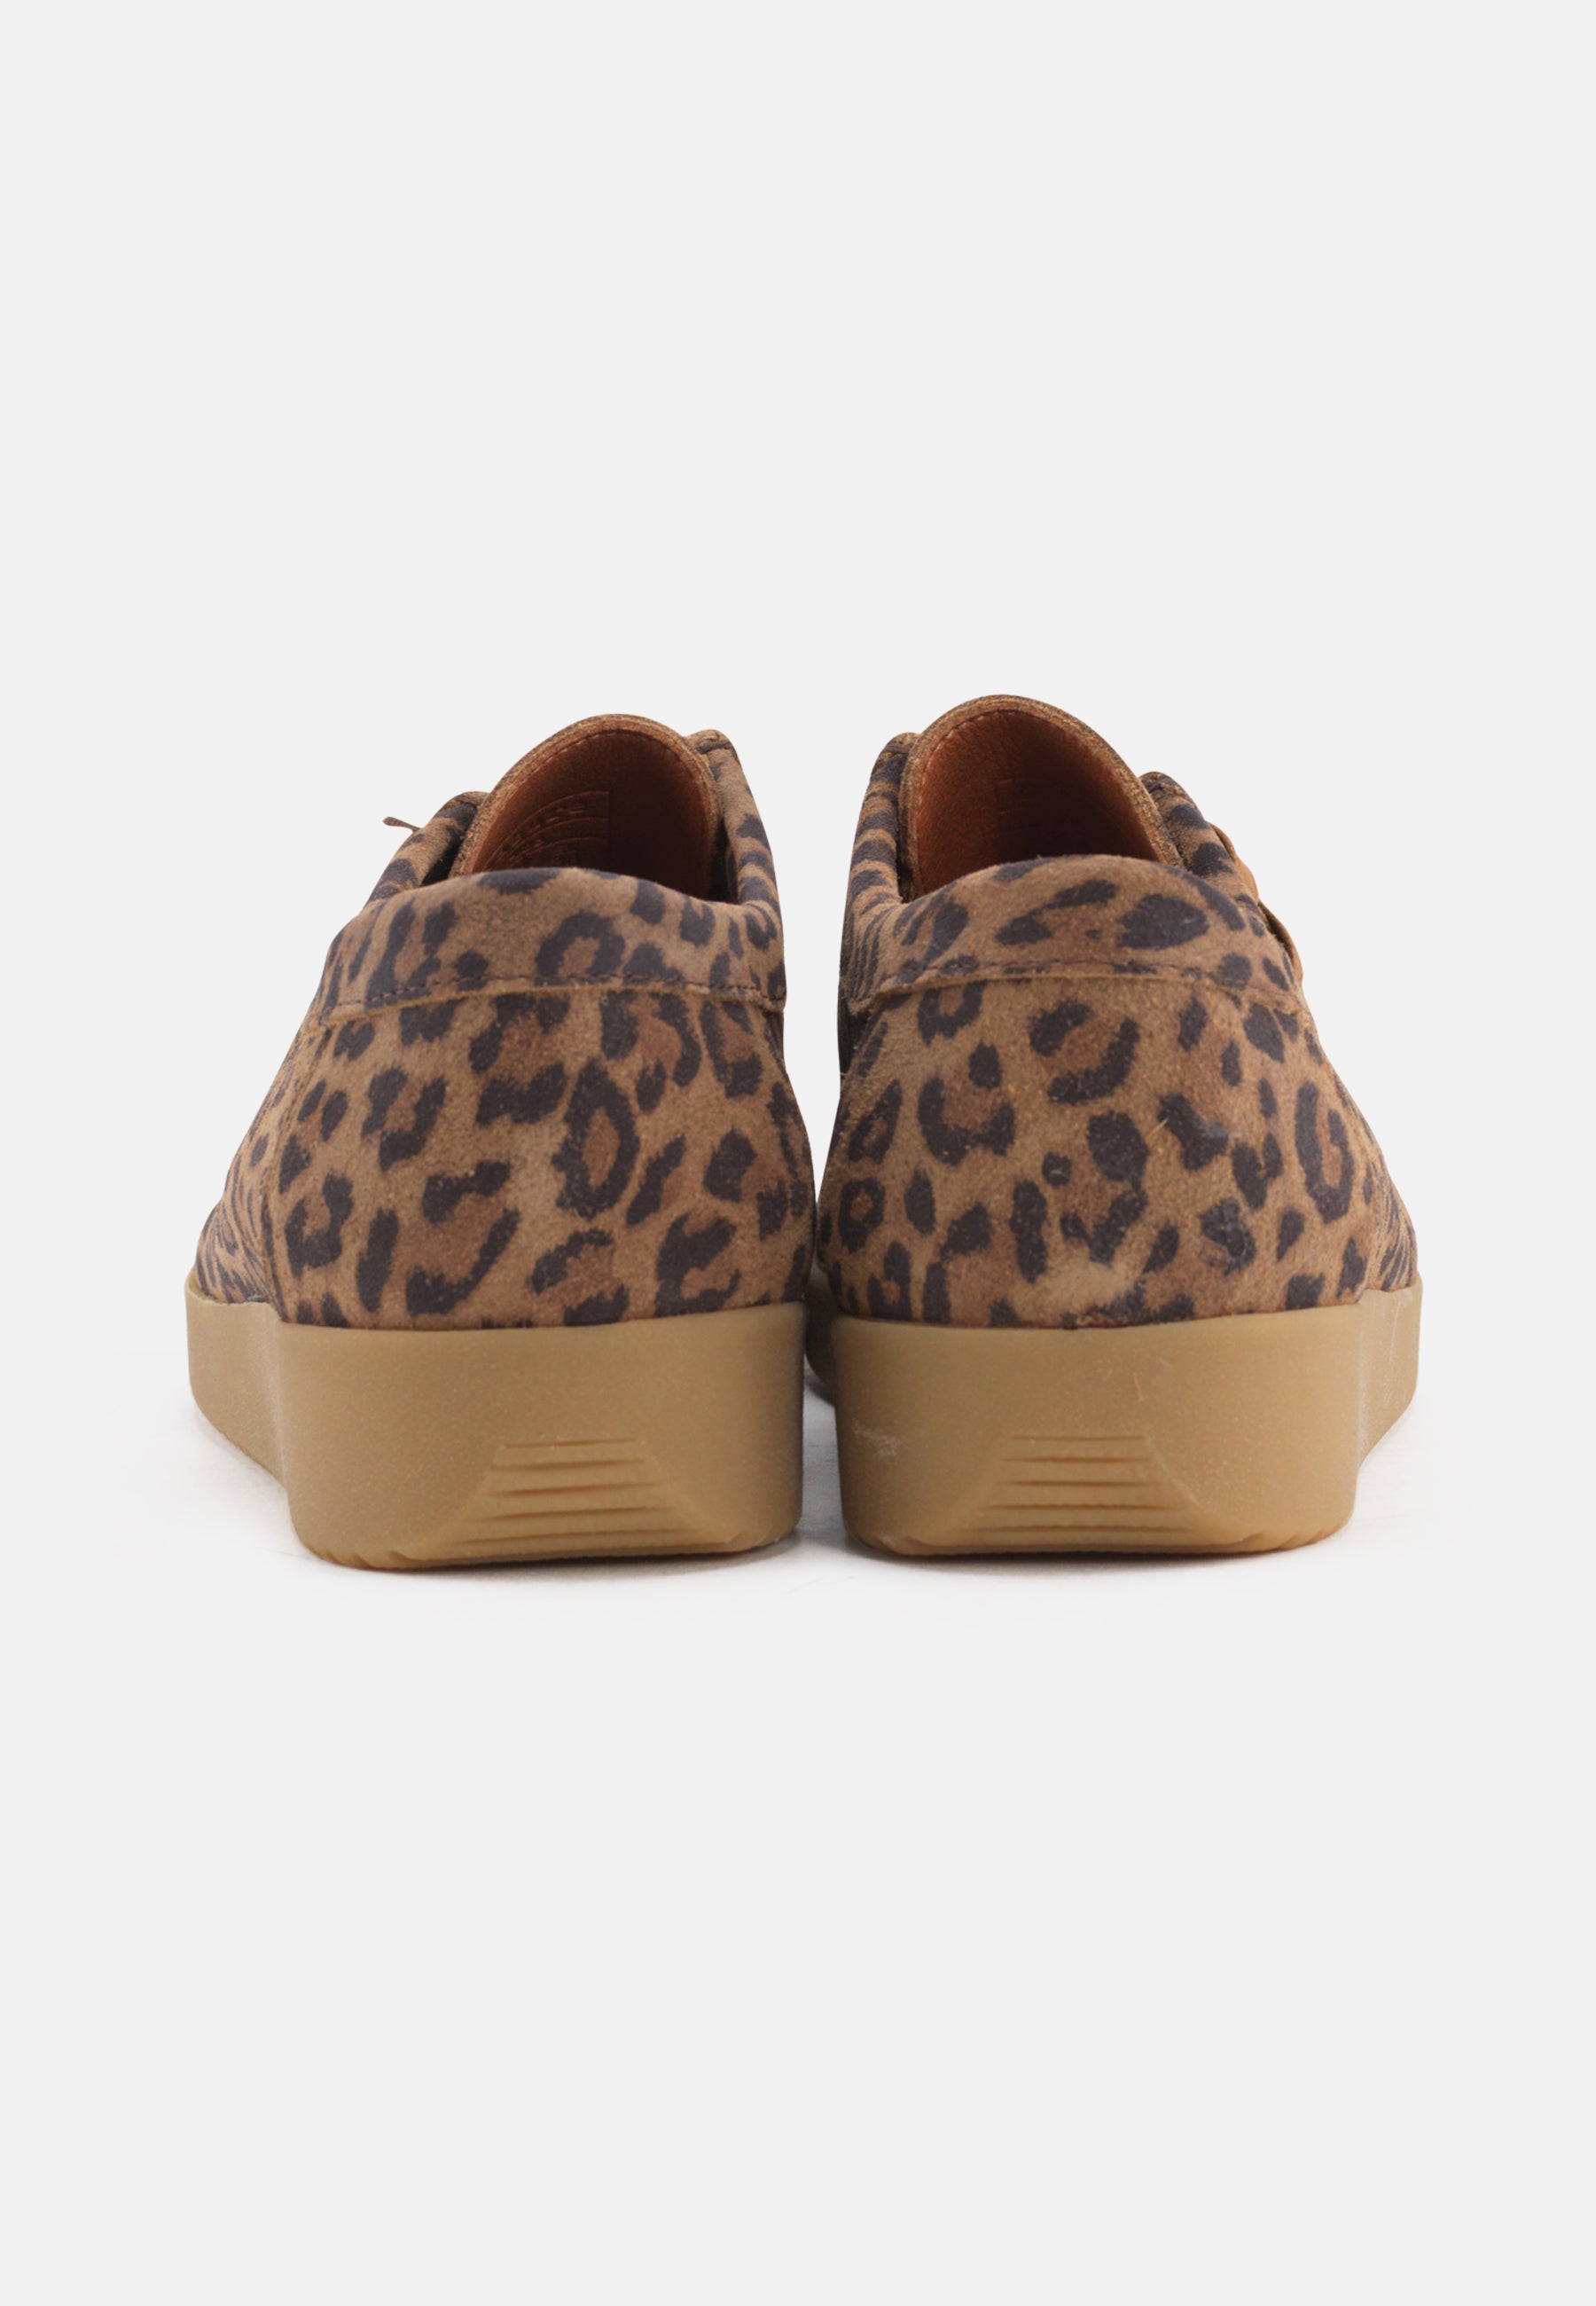 Alba Shoes Wildleder-Print – Leopard